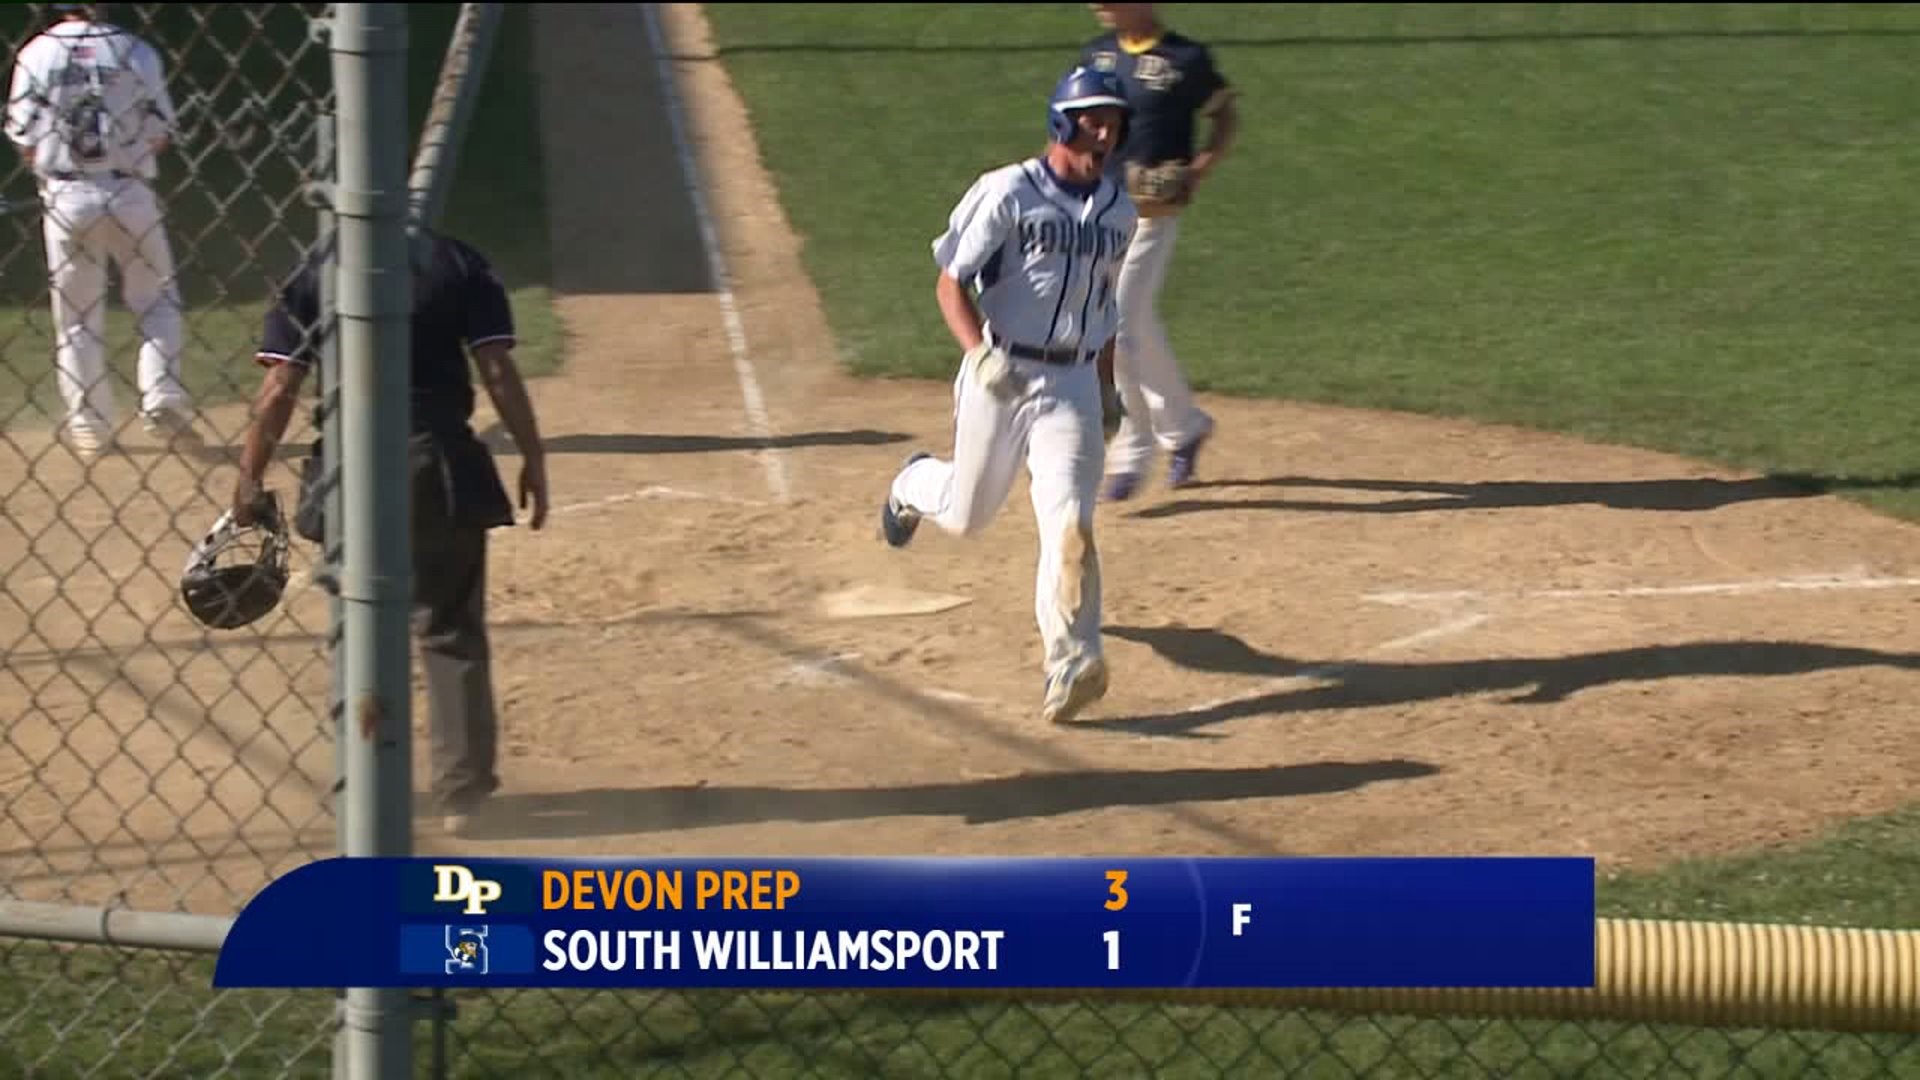 South Williamsport vs Devon Prep